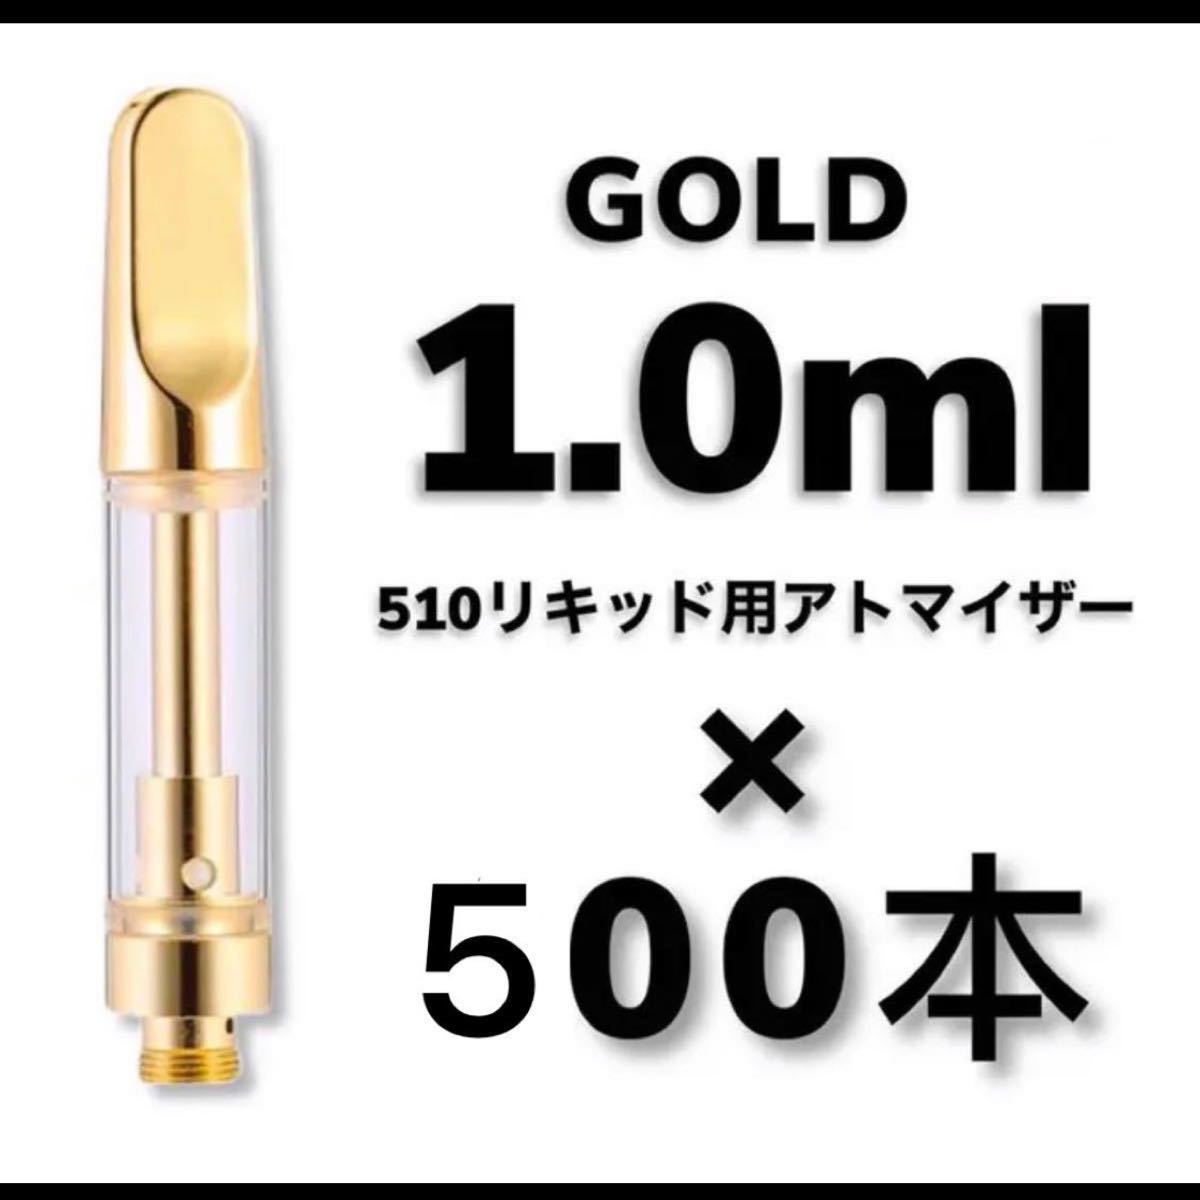 ☆Cure Pen☆CBDリキッド用 Ccell アトマイザー 510 ゴールド 